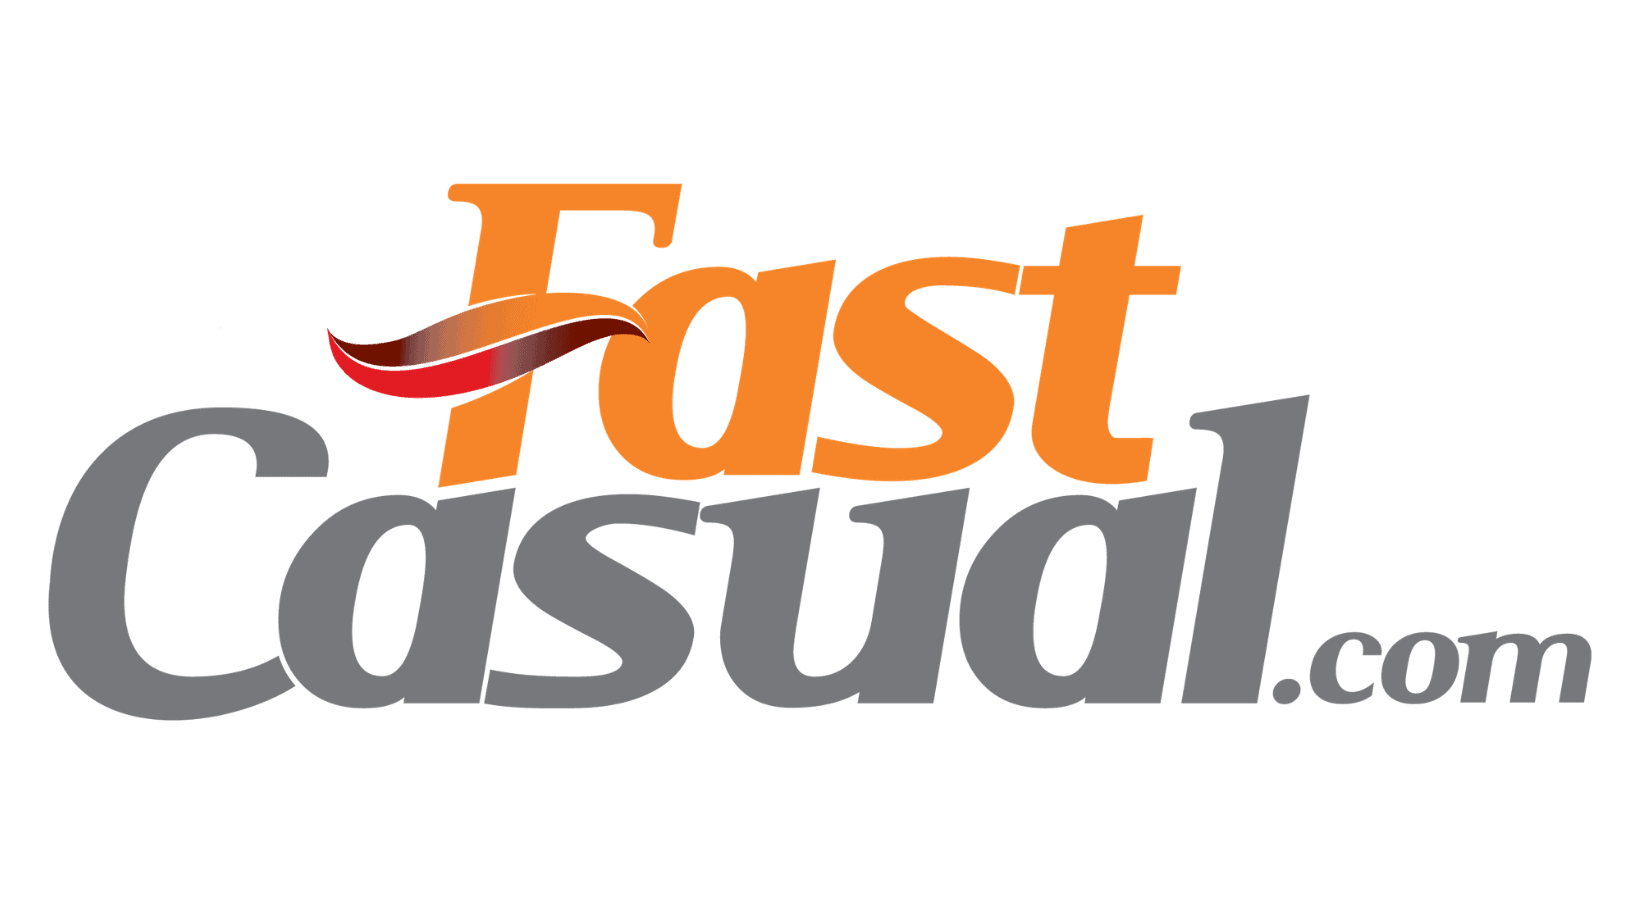 Fast Causal Magazine Logo